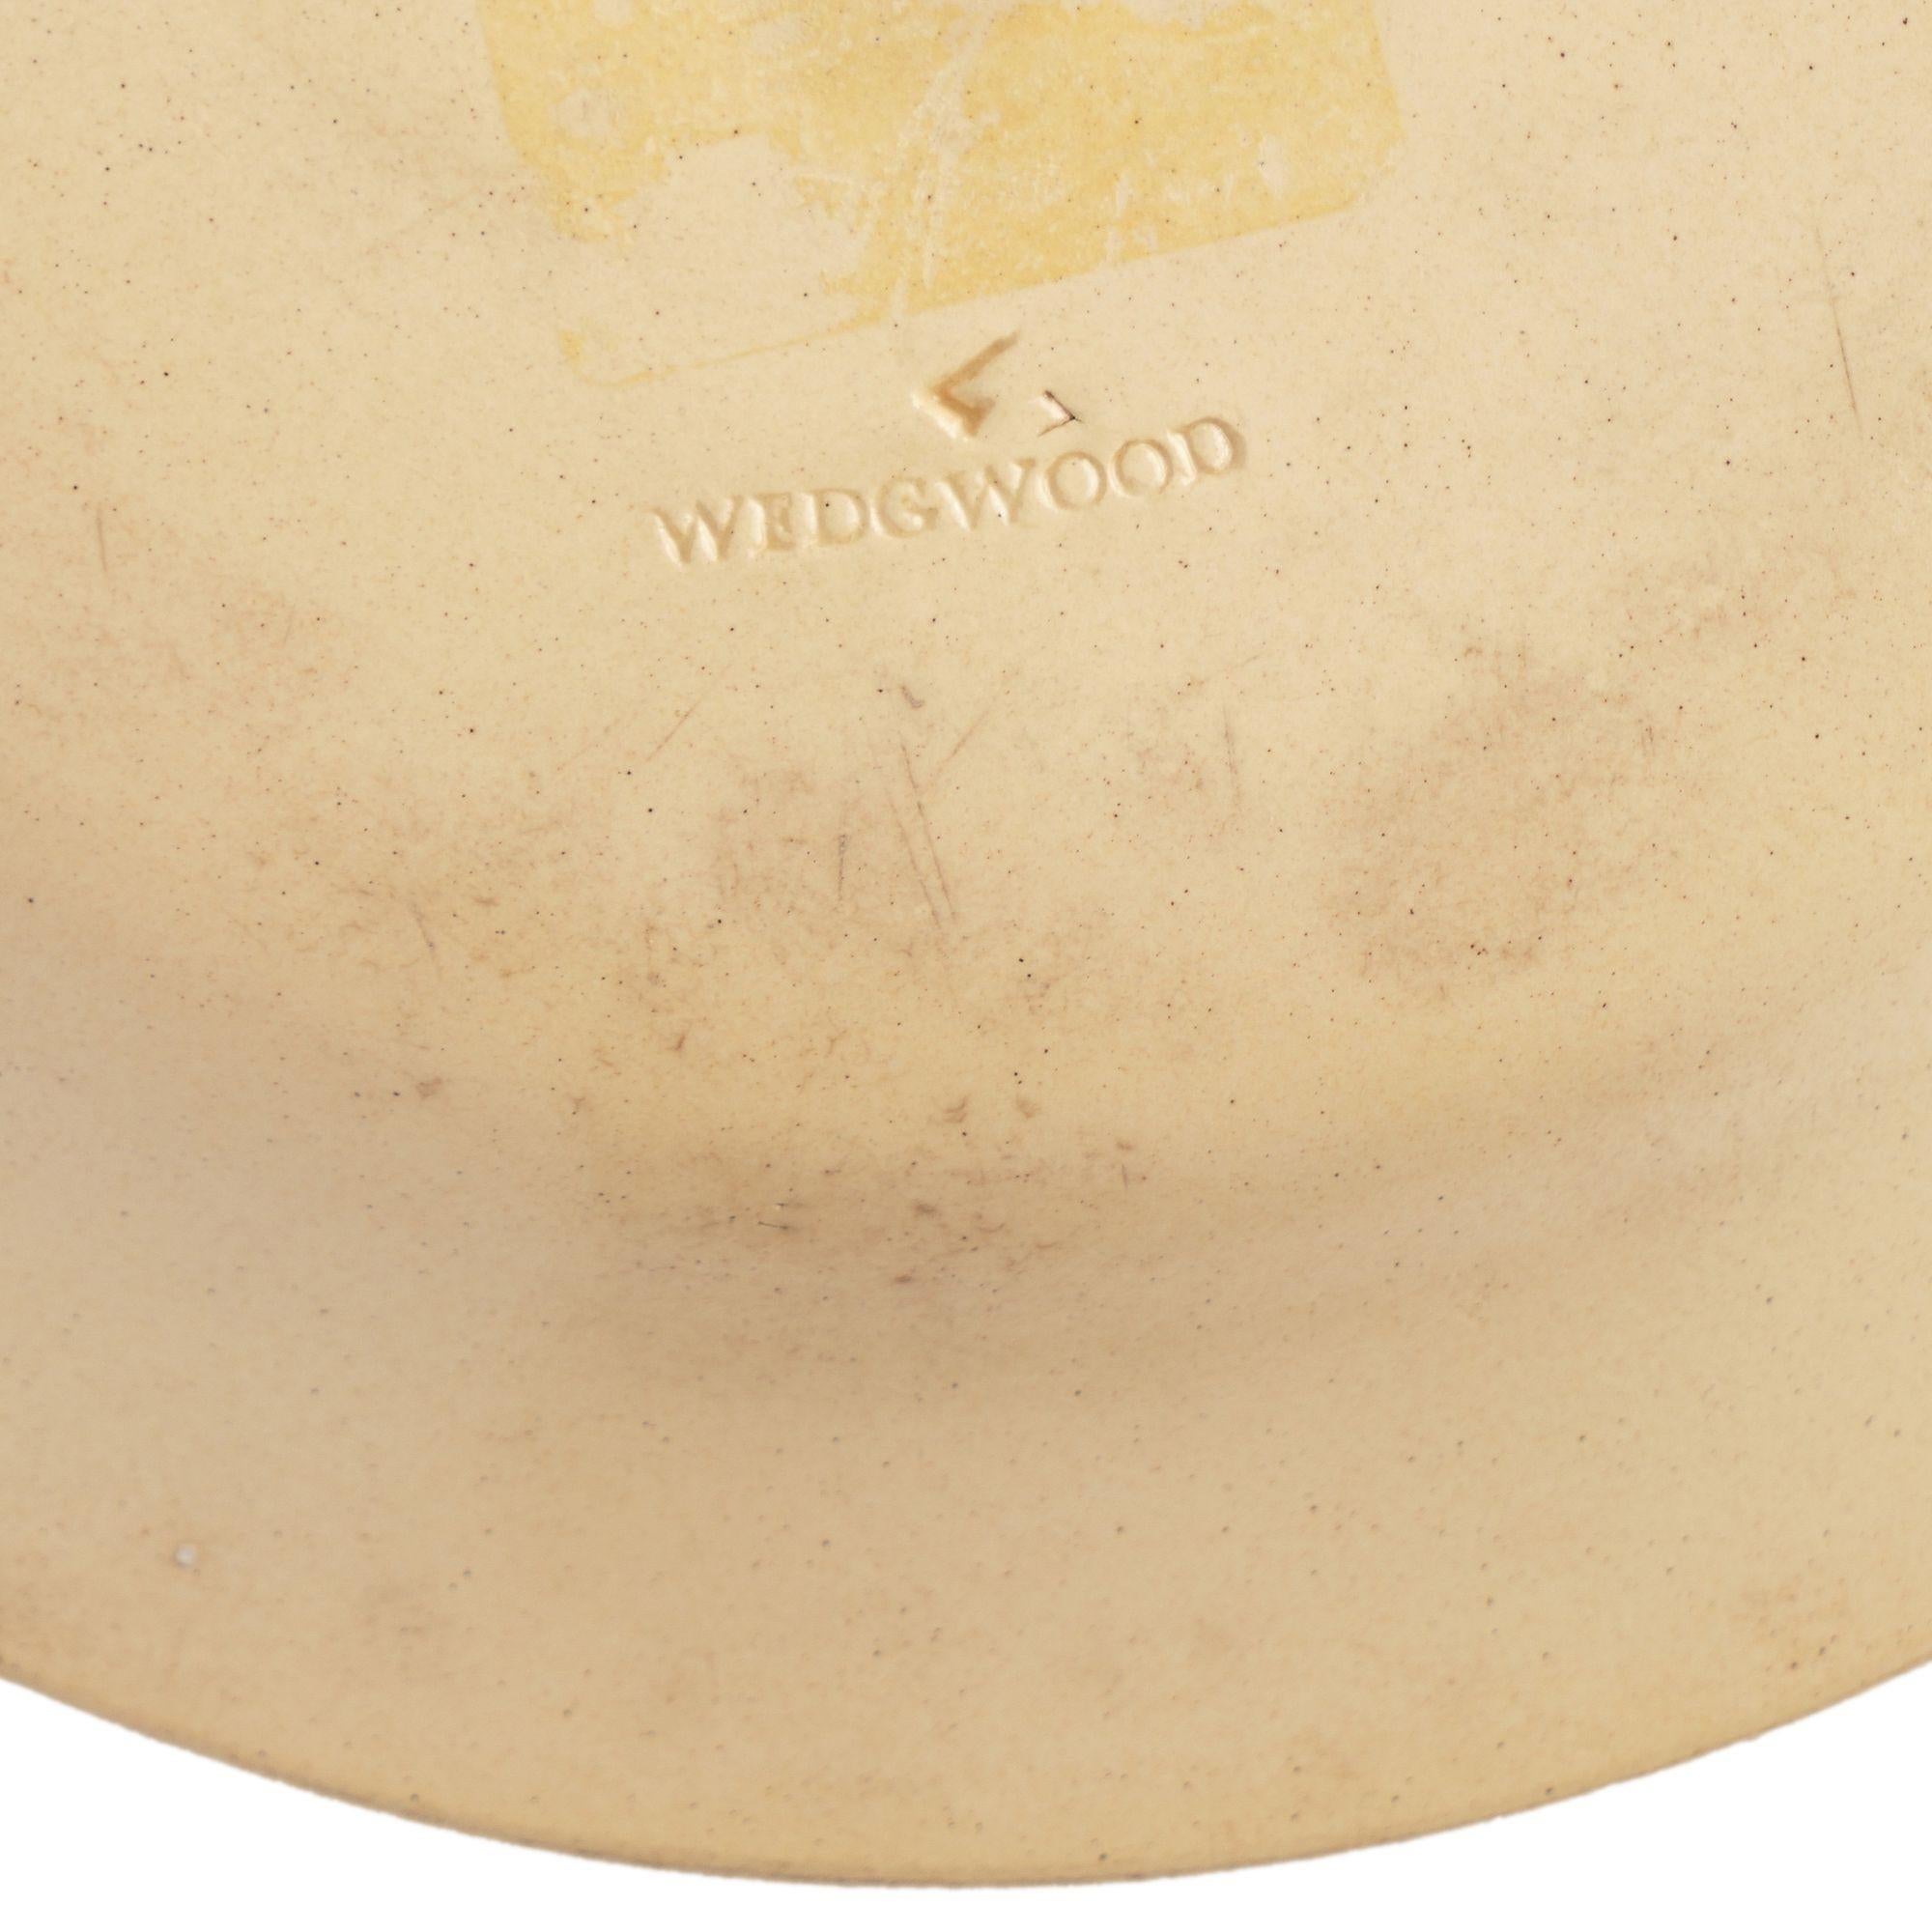 19th Century Wedgwood majolica cane ware ceramic dessert plate, c. 1820 For Sale